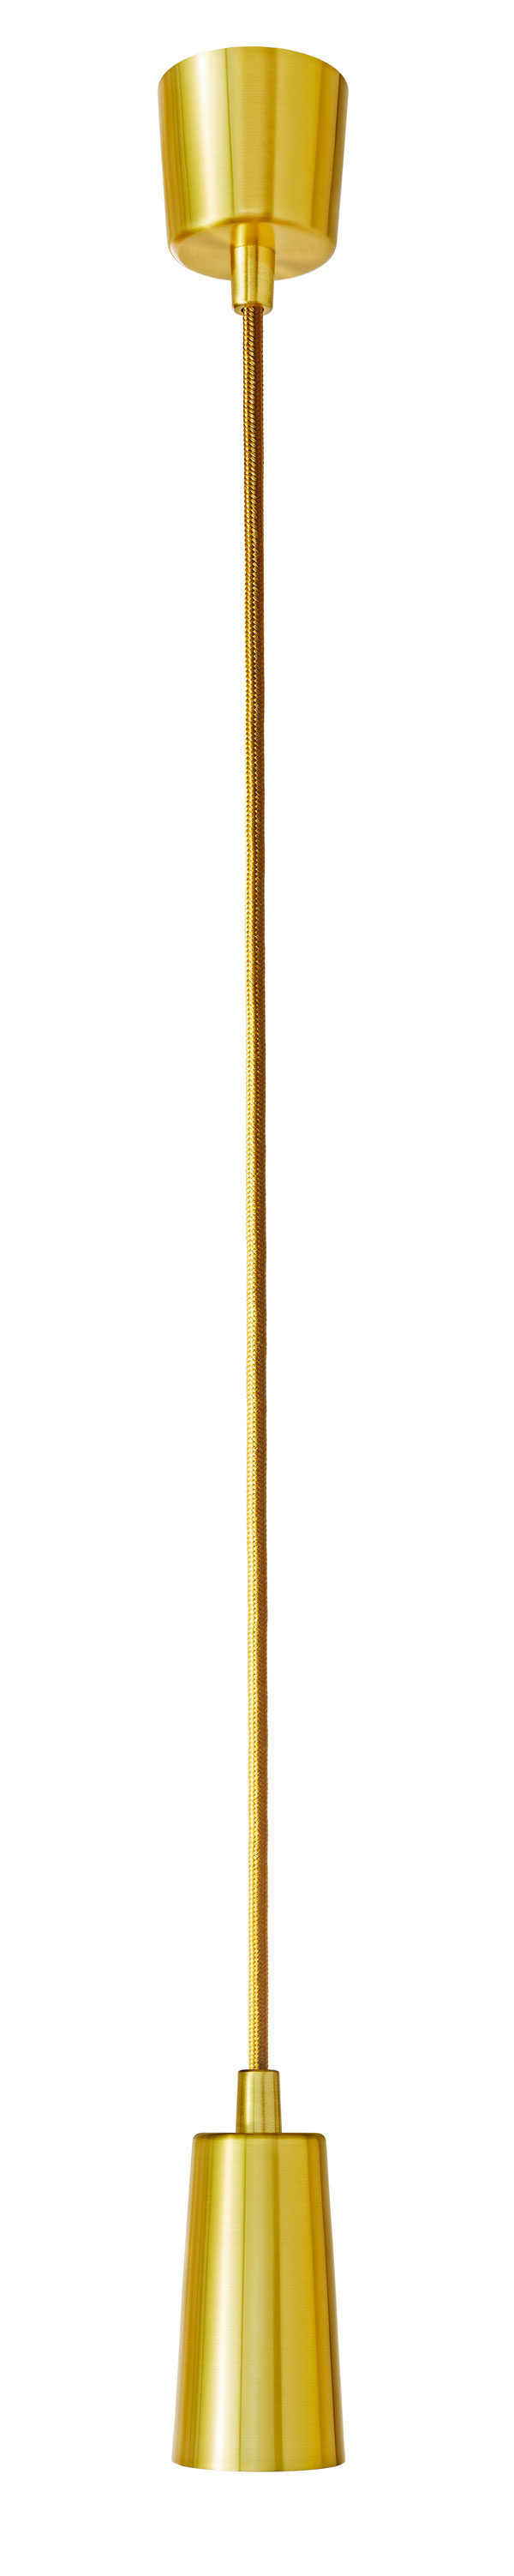 Brushed Brass Drop Cap by Plumen